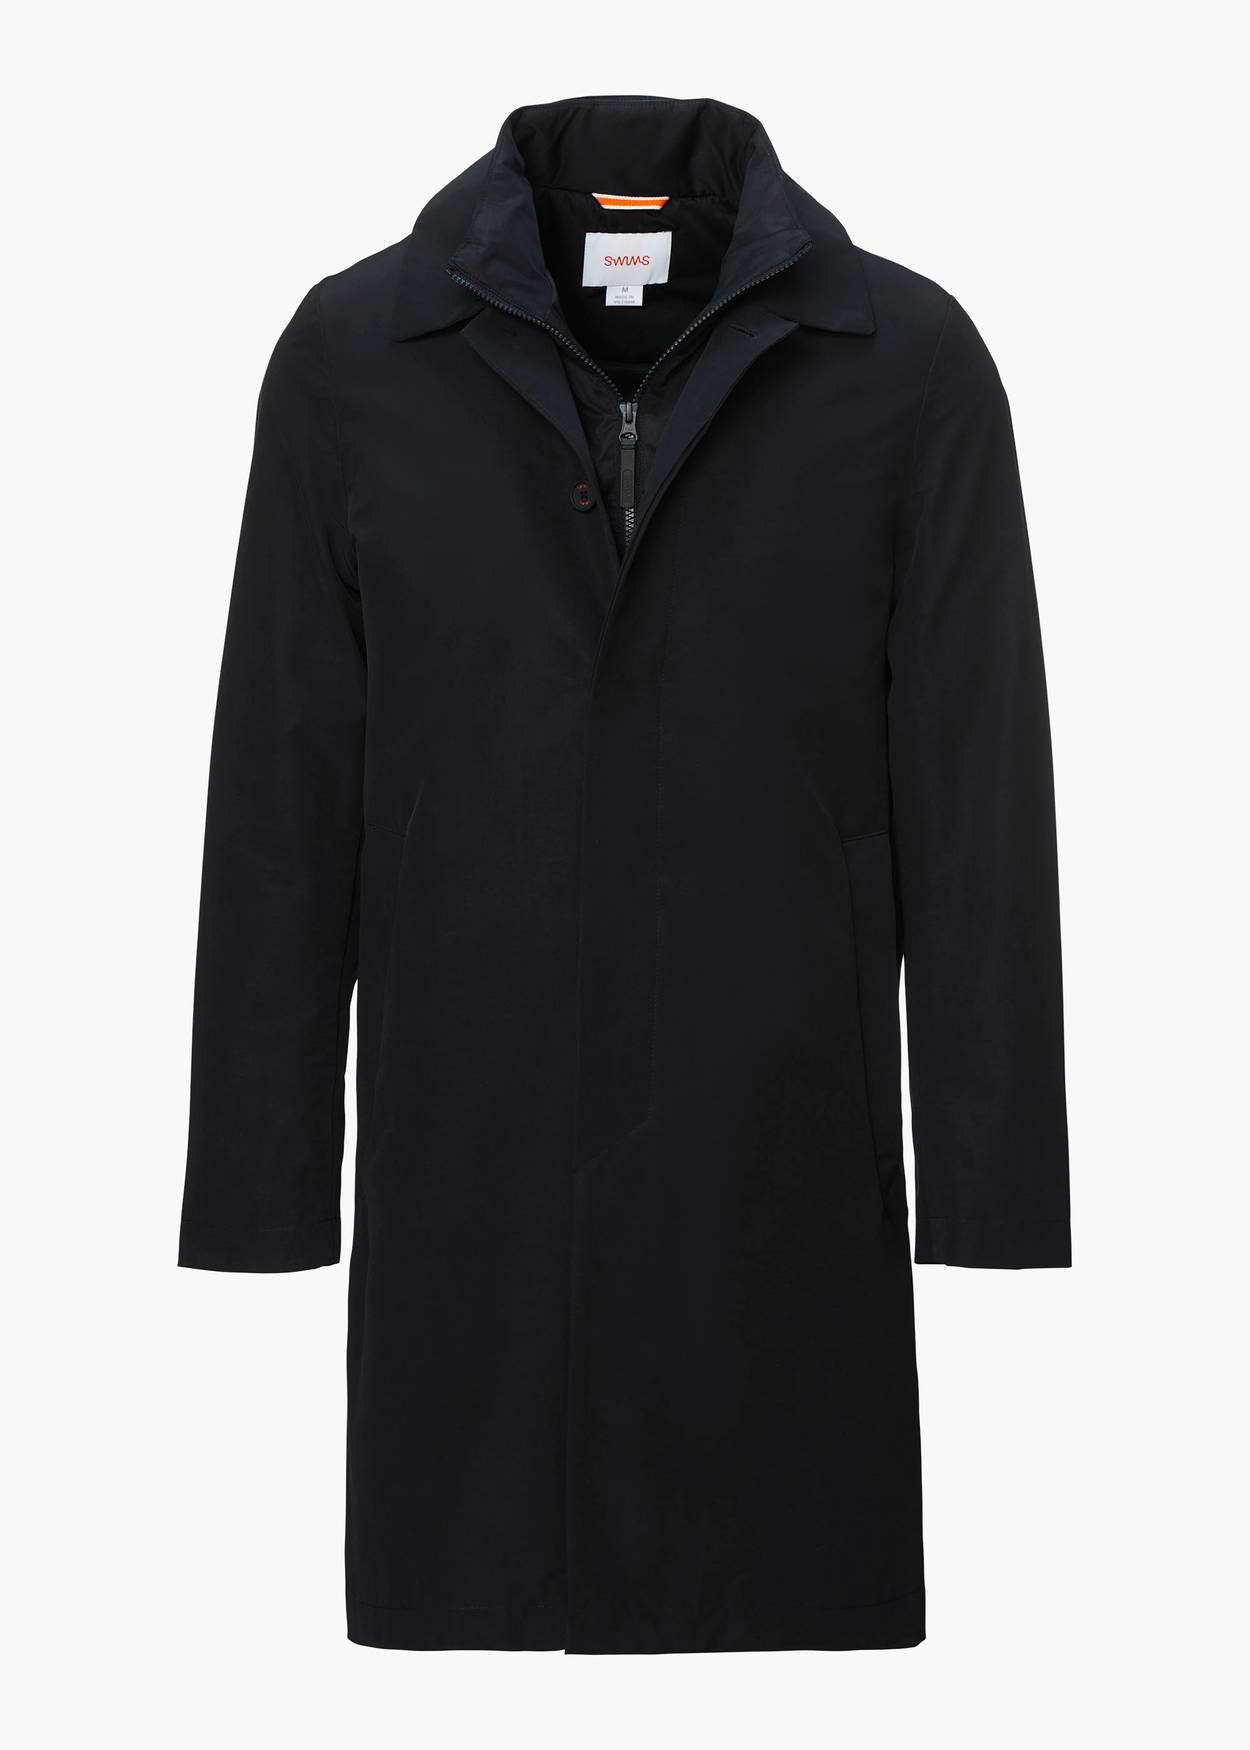 Mayfair Coat